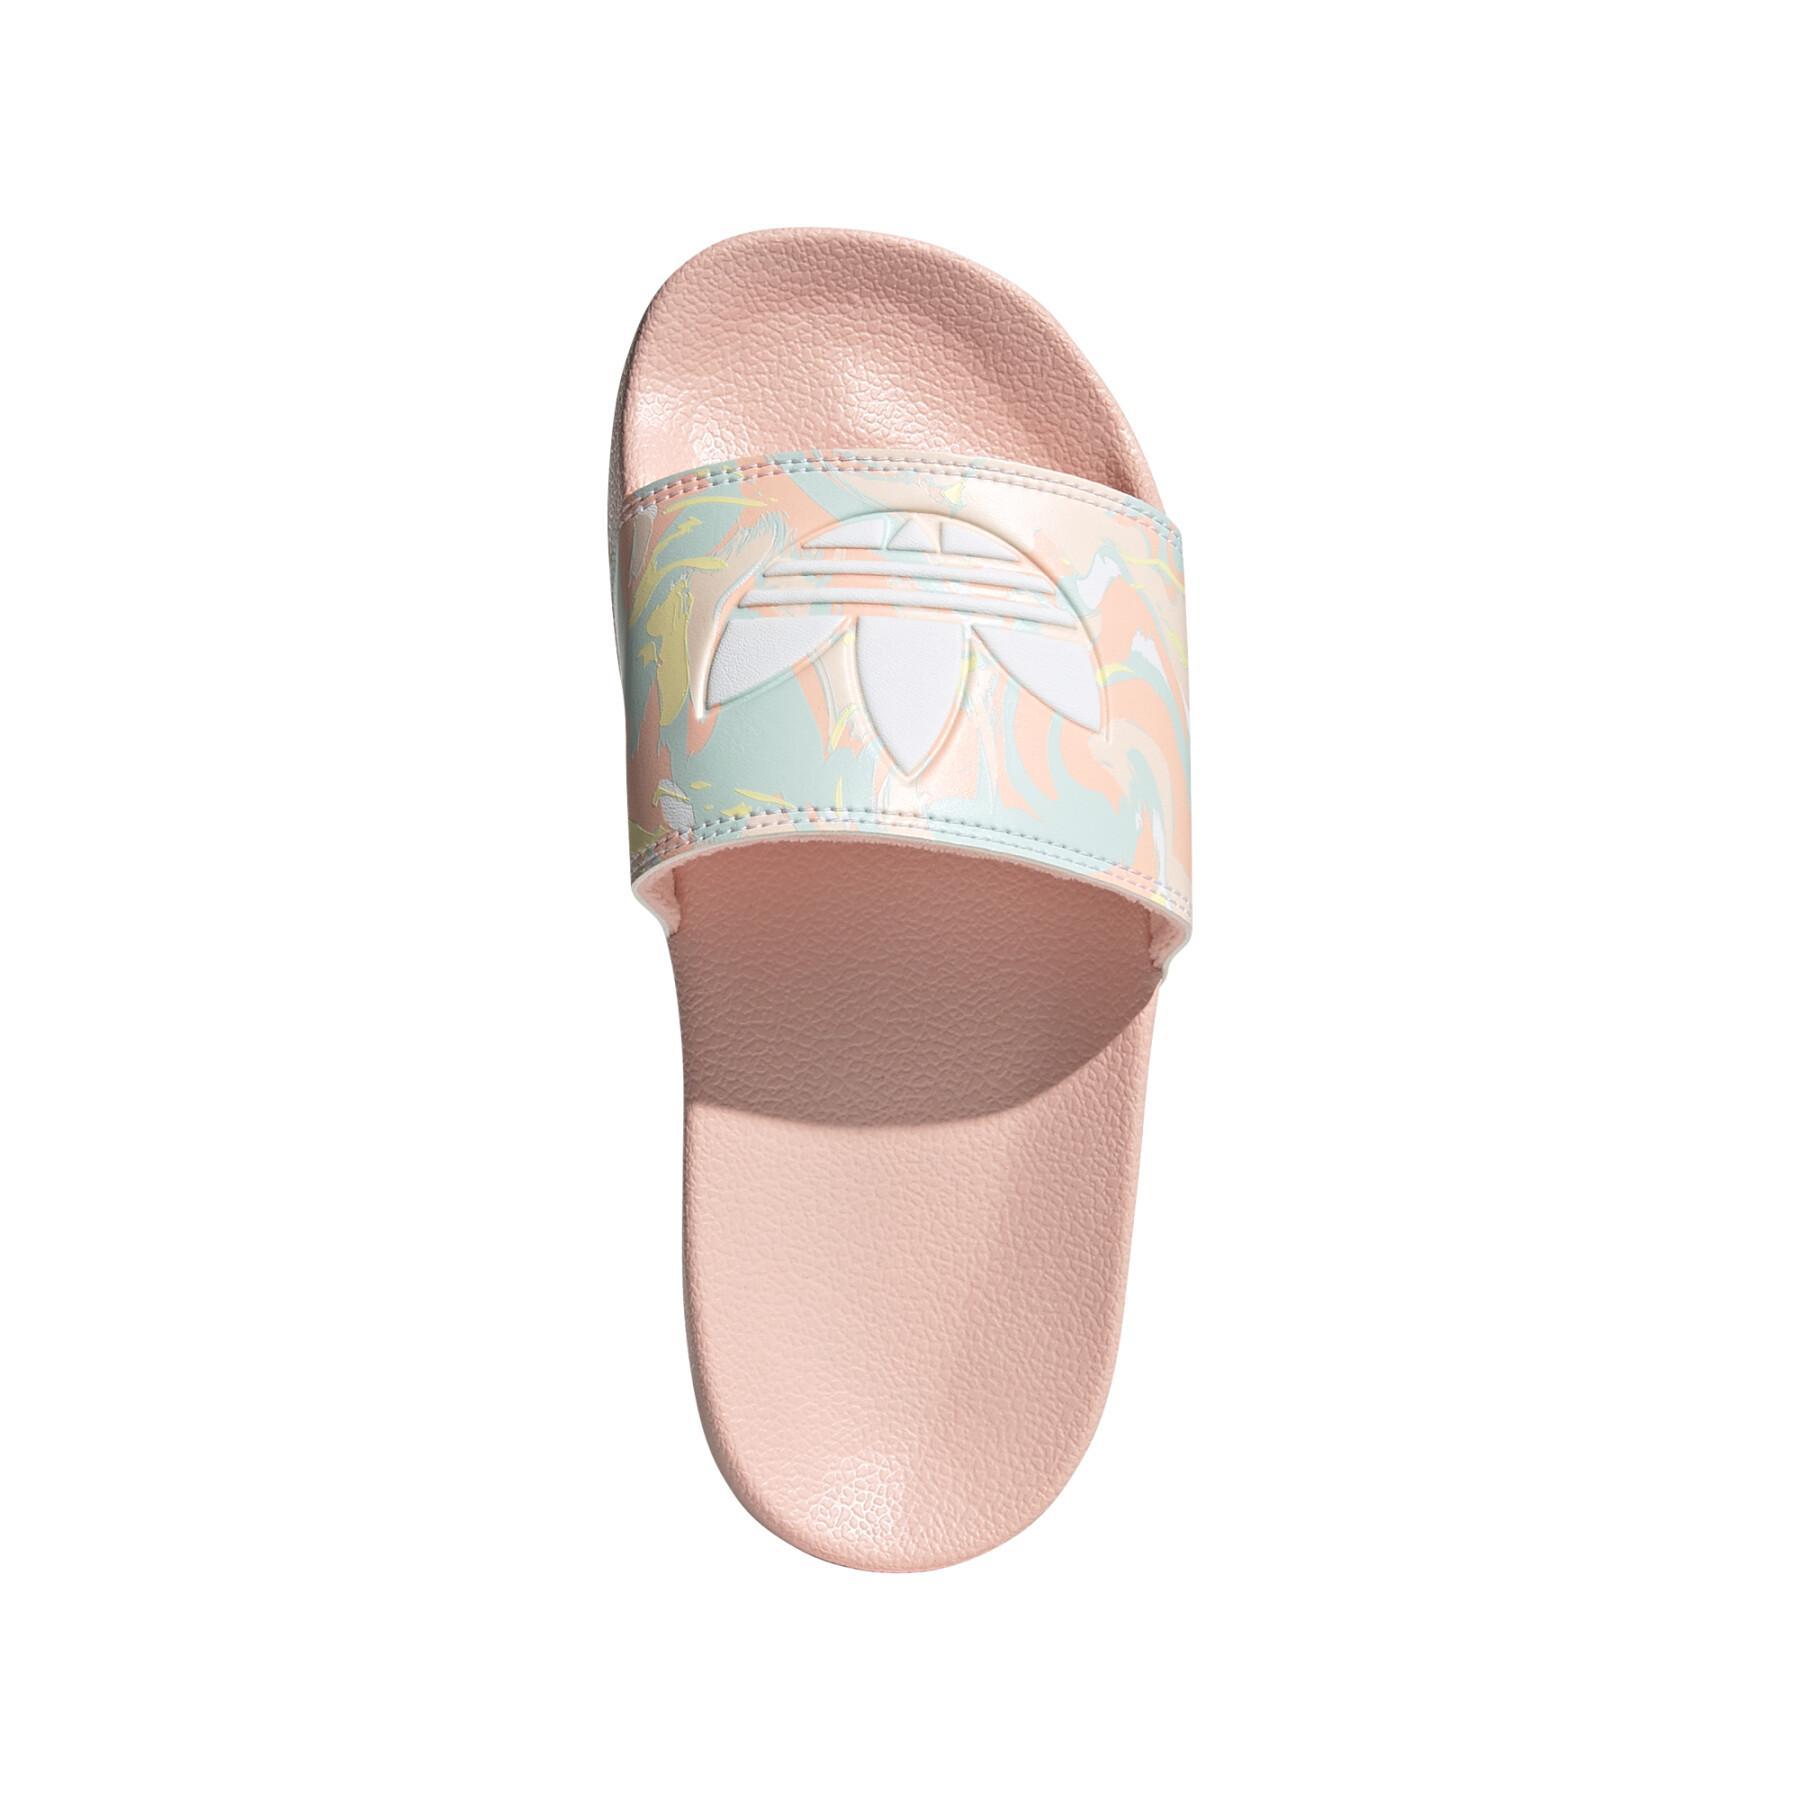 Children's flip-flops adidas Originals Adilette Lite